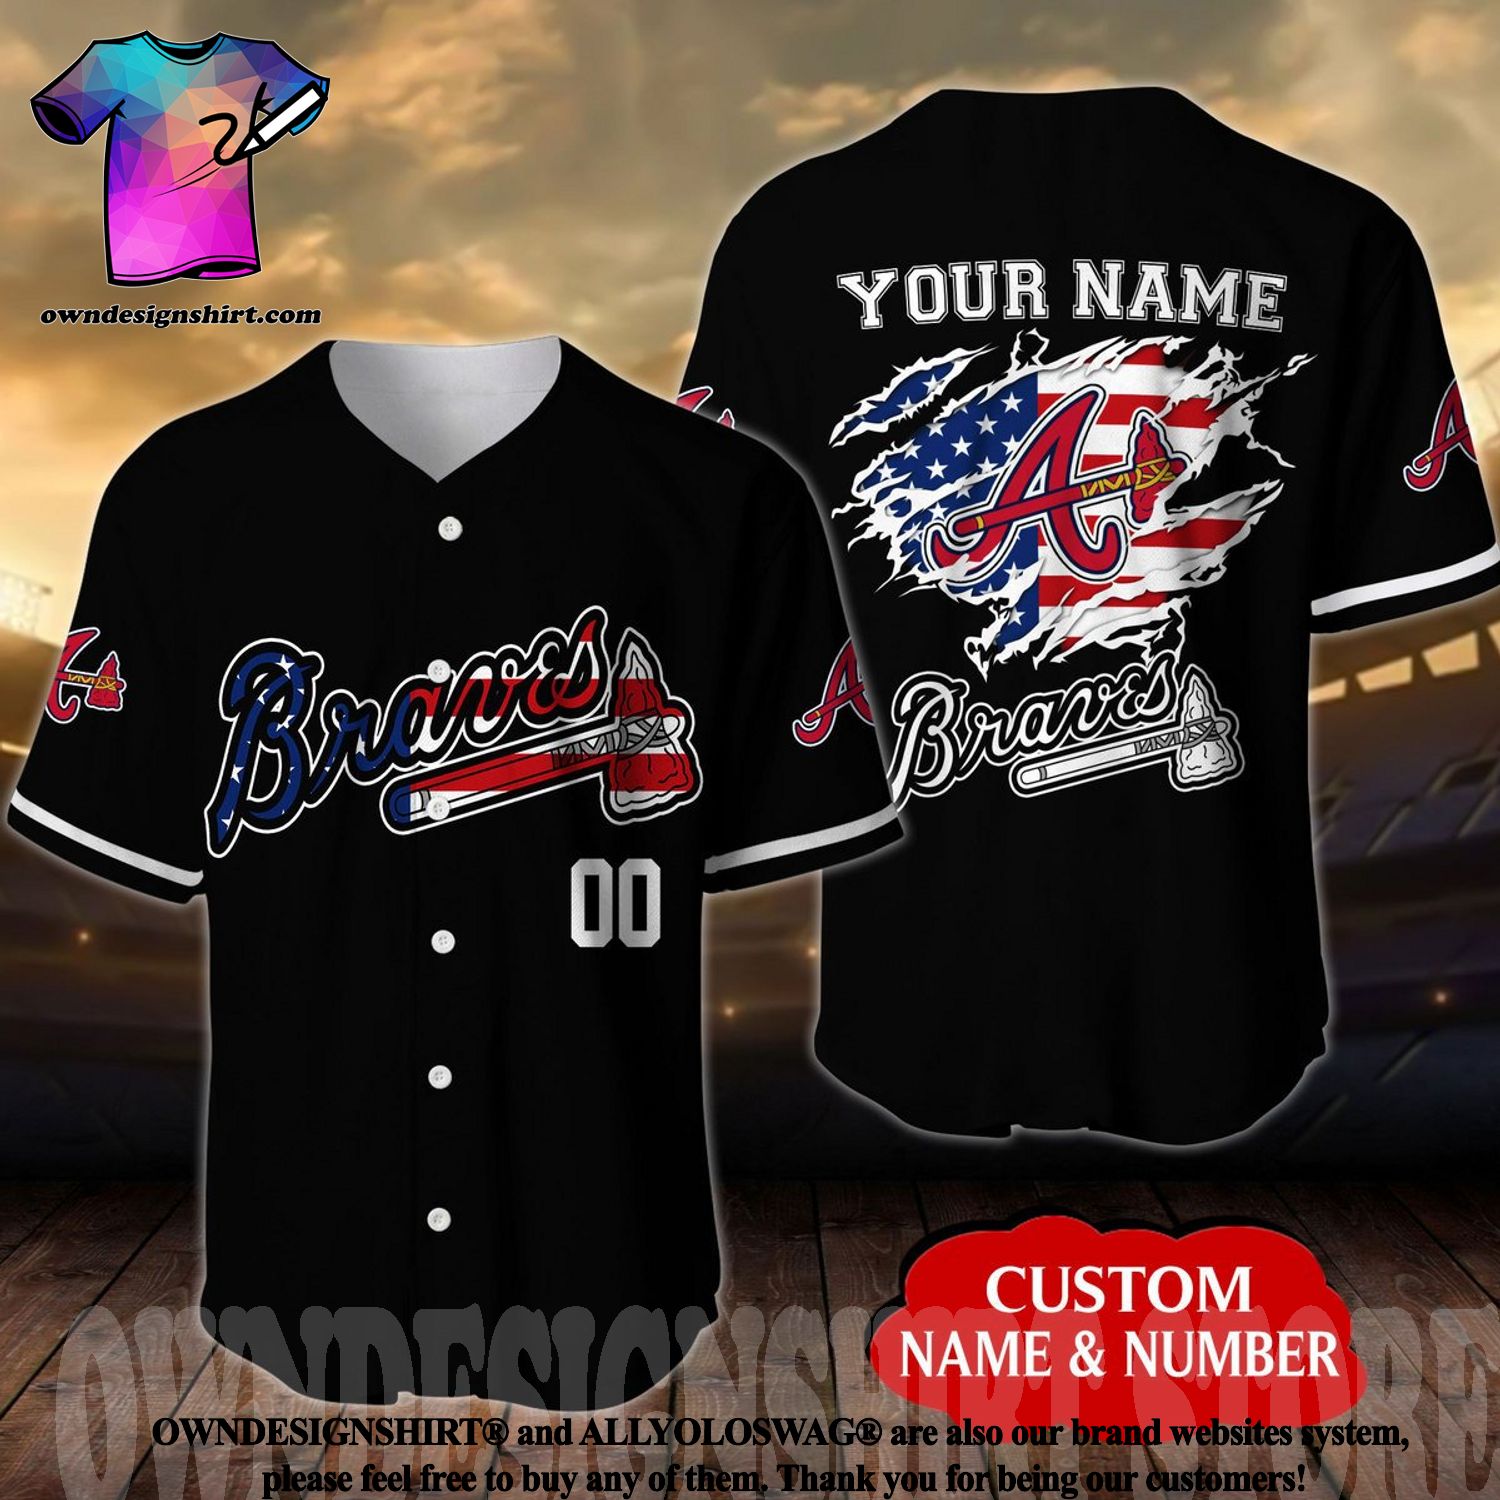 Atlanta Braves Camp Beige Long Sleeve T-Shirt